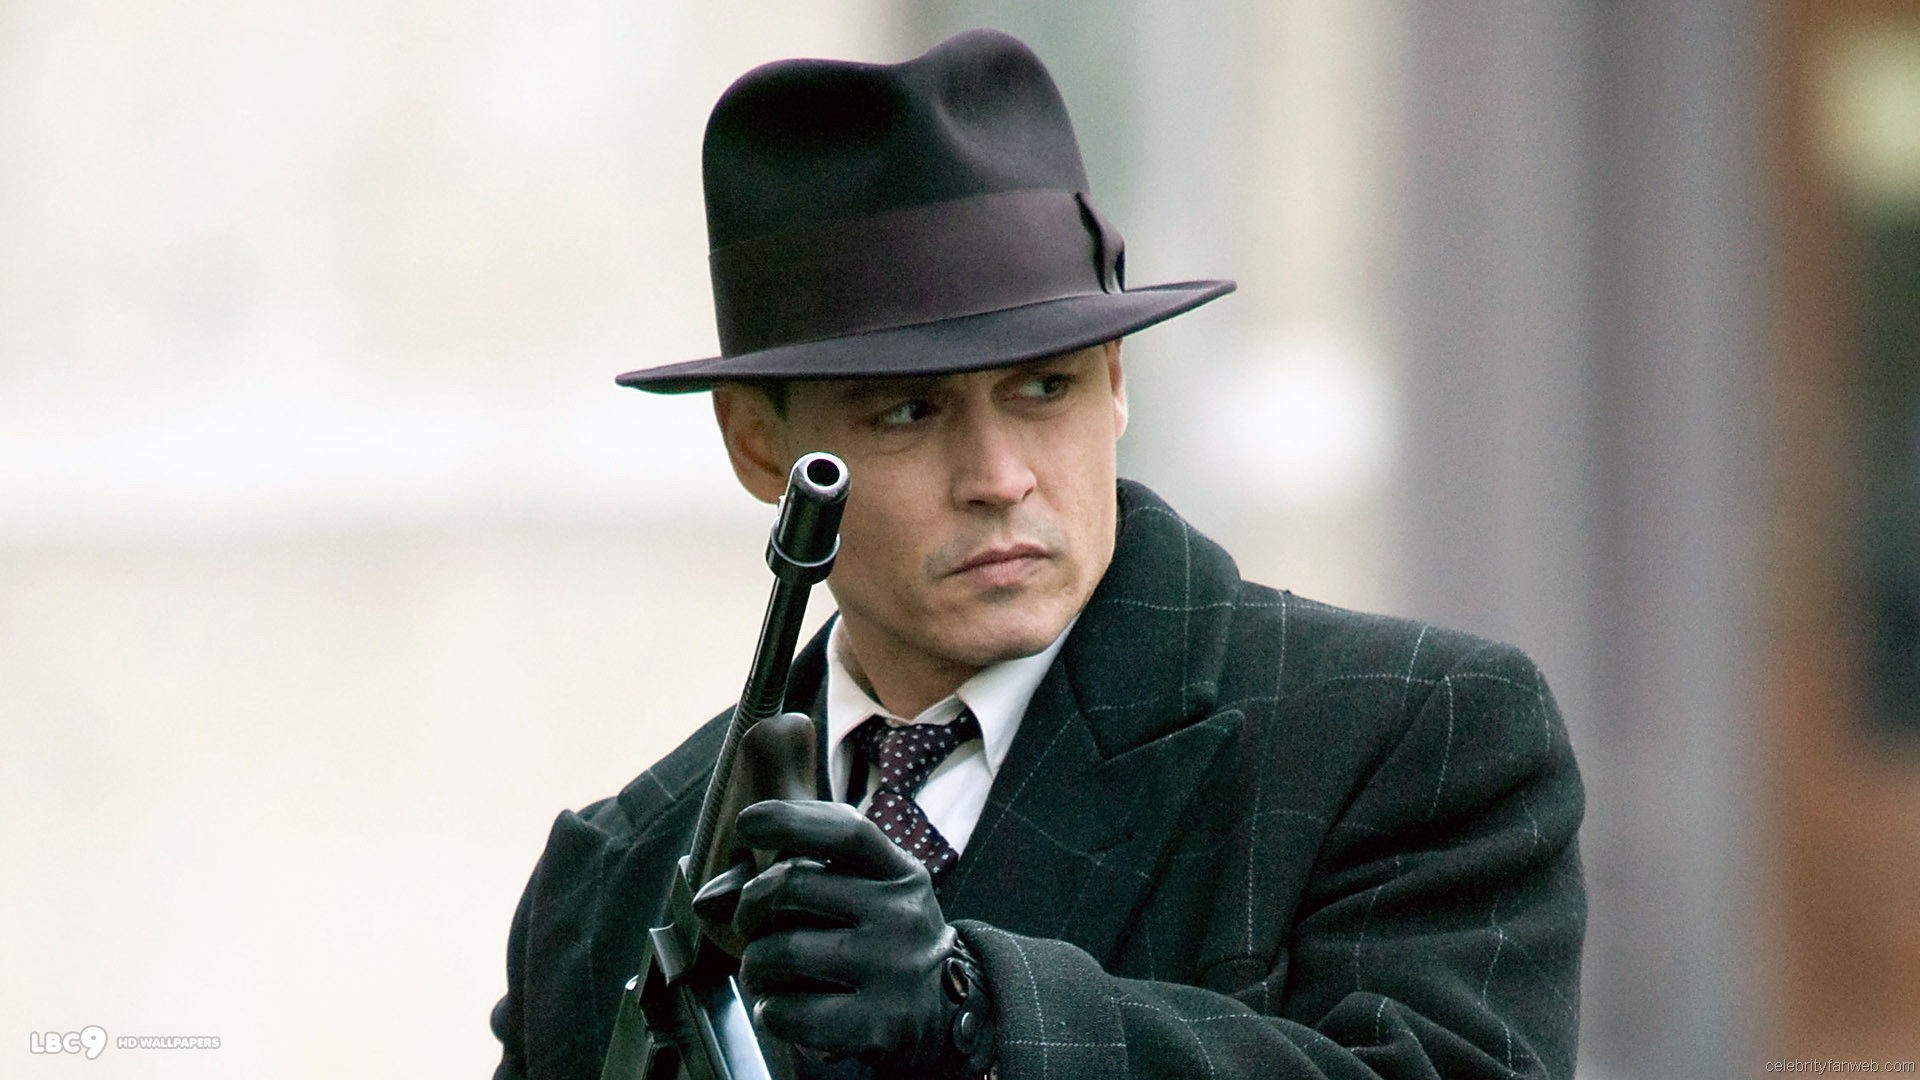 People 1920x1080 Johnny Depp movies Public Enemies 2009 (Year) tommy gun weapon actor hat men